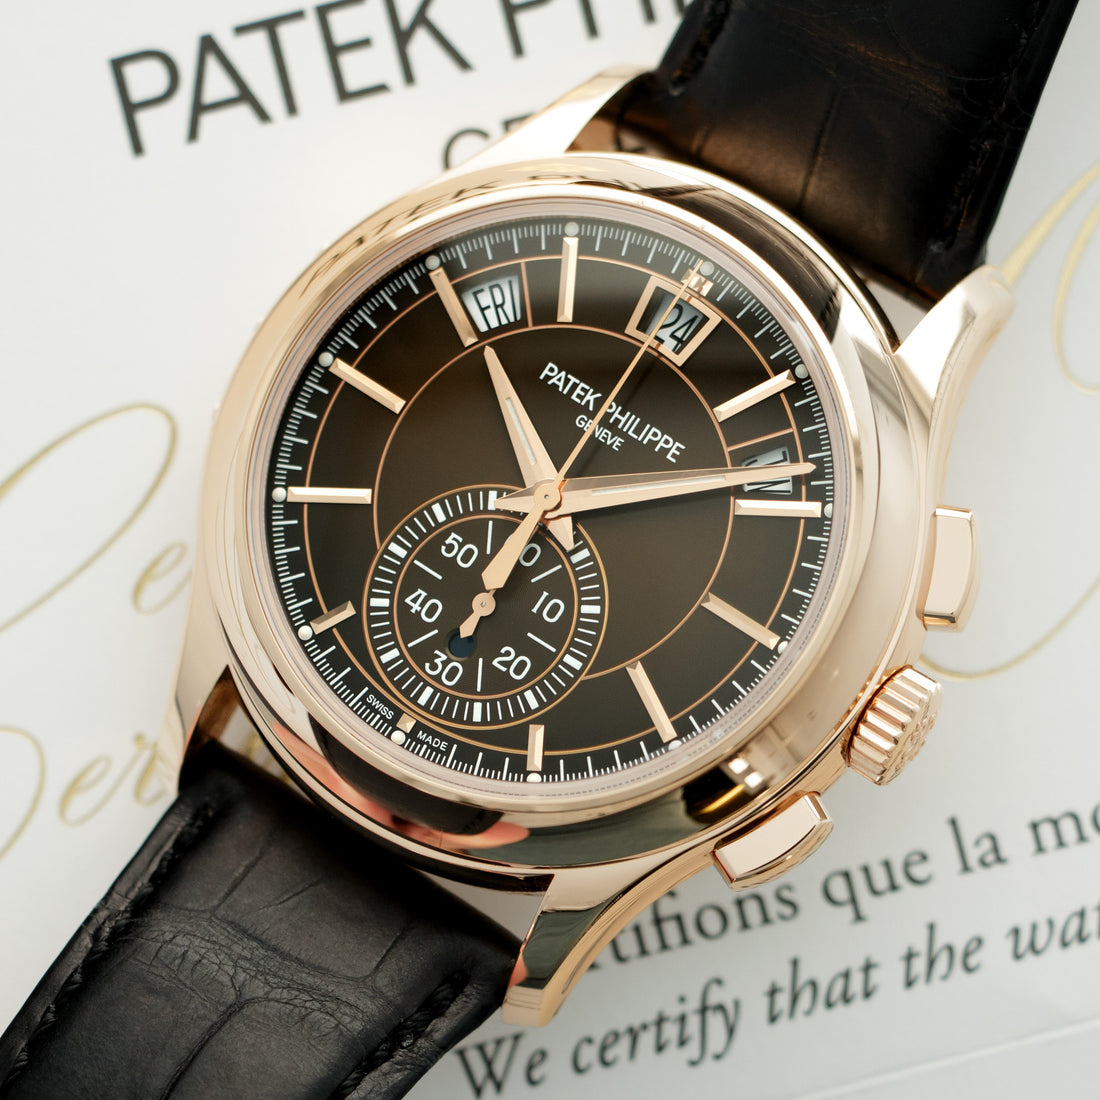 Patek Philippe Annual Calendar Chronograph Watch Ref. 5905